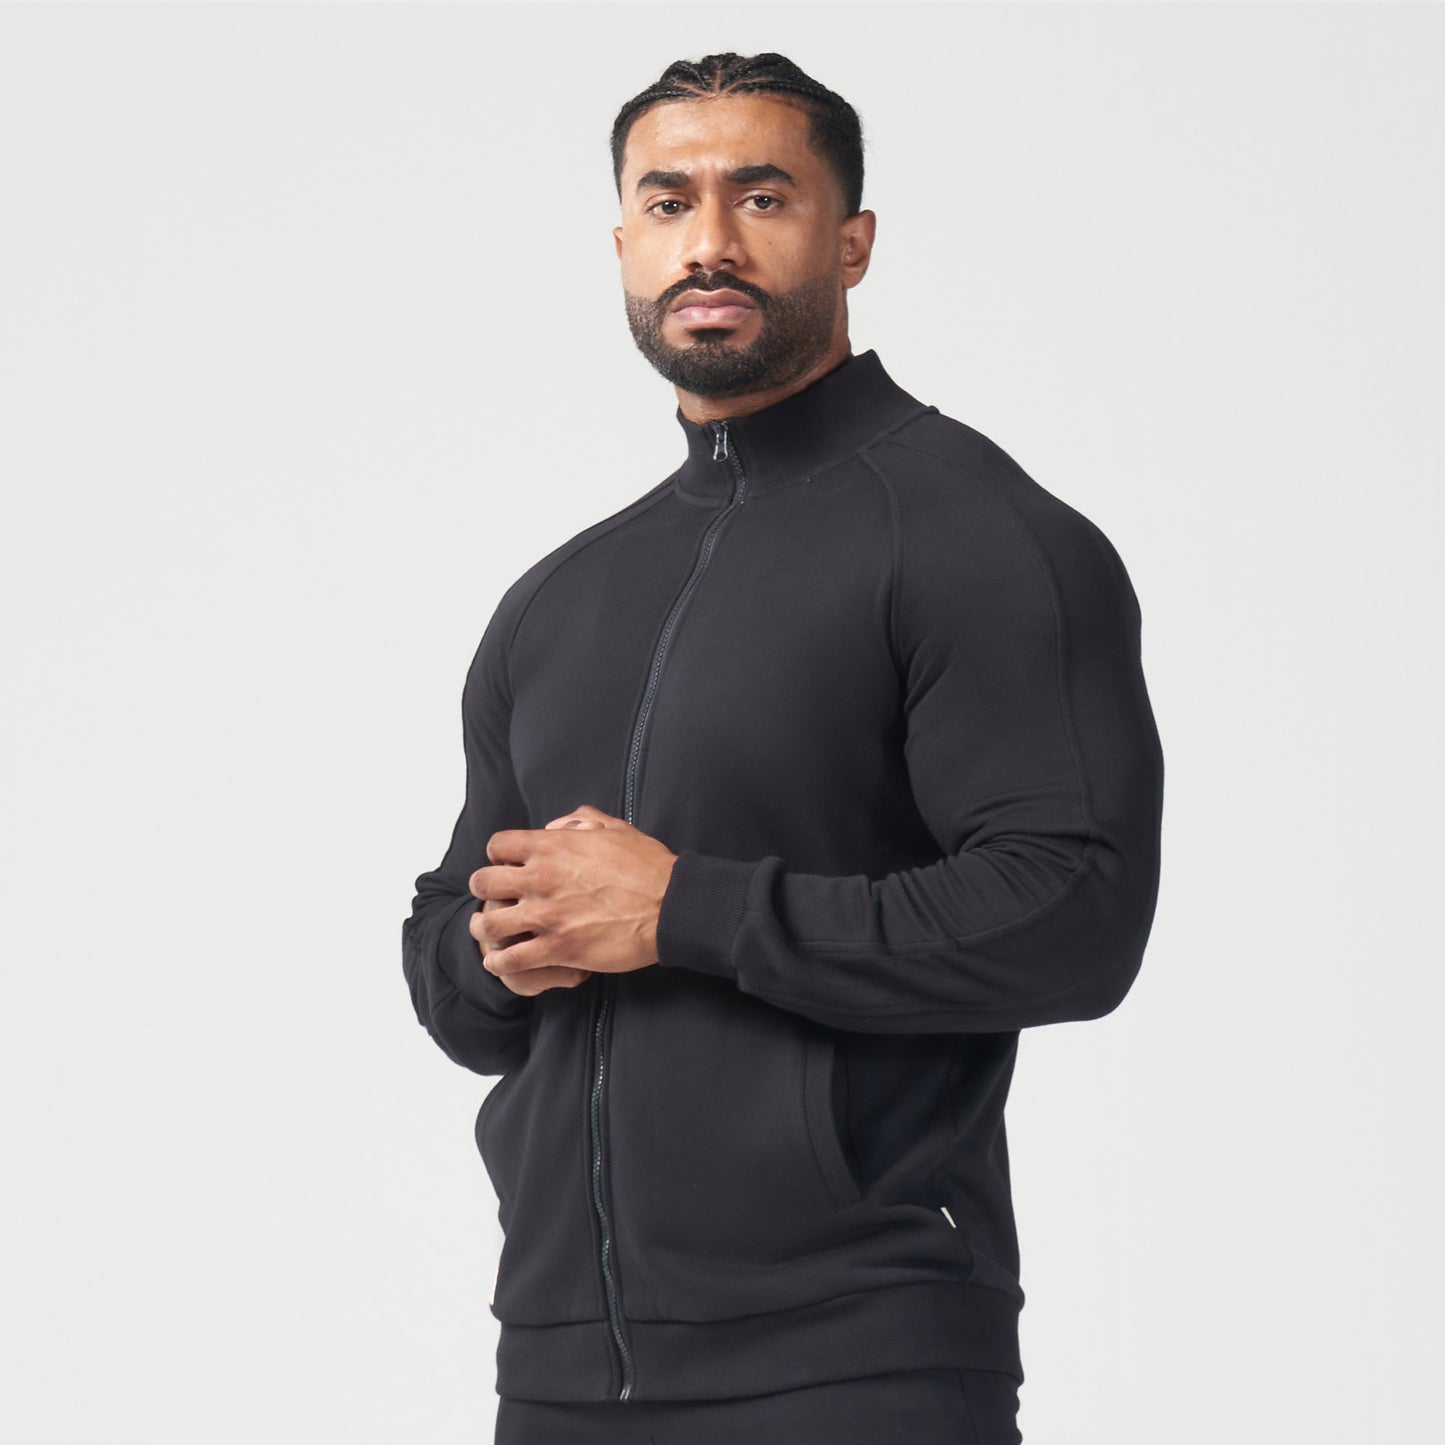 squatwolf-gym-wear-golden-era-retro-jacket-black-workout-hoodies-for-men